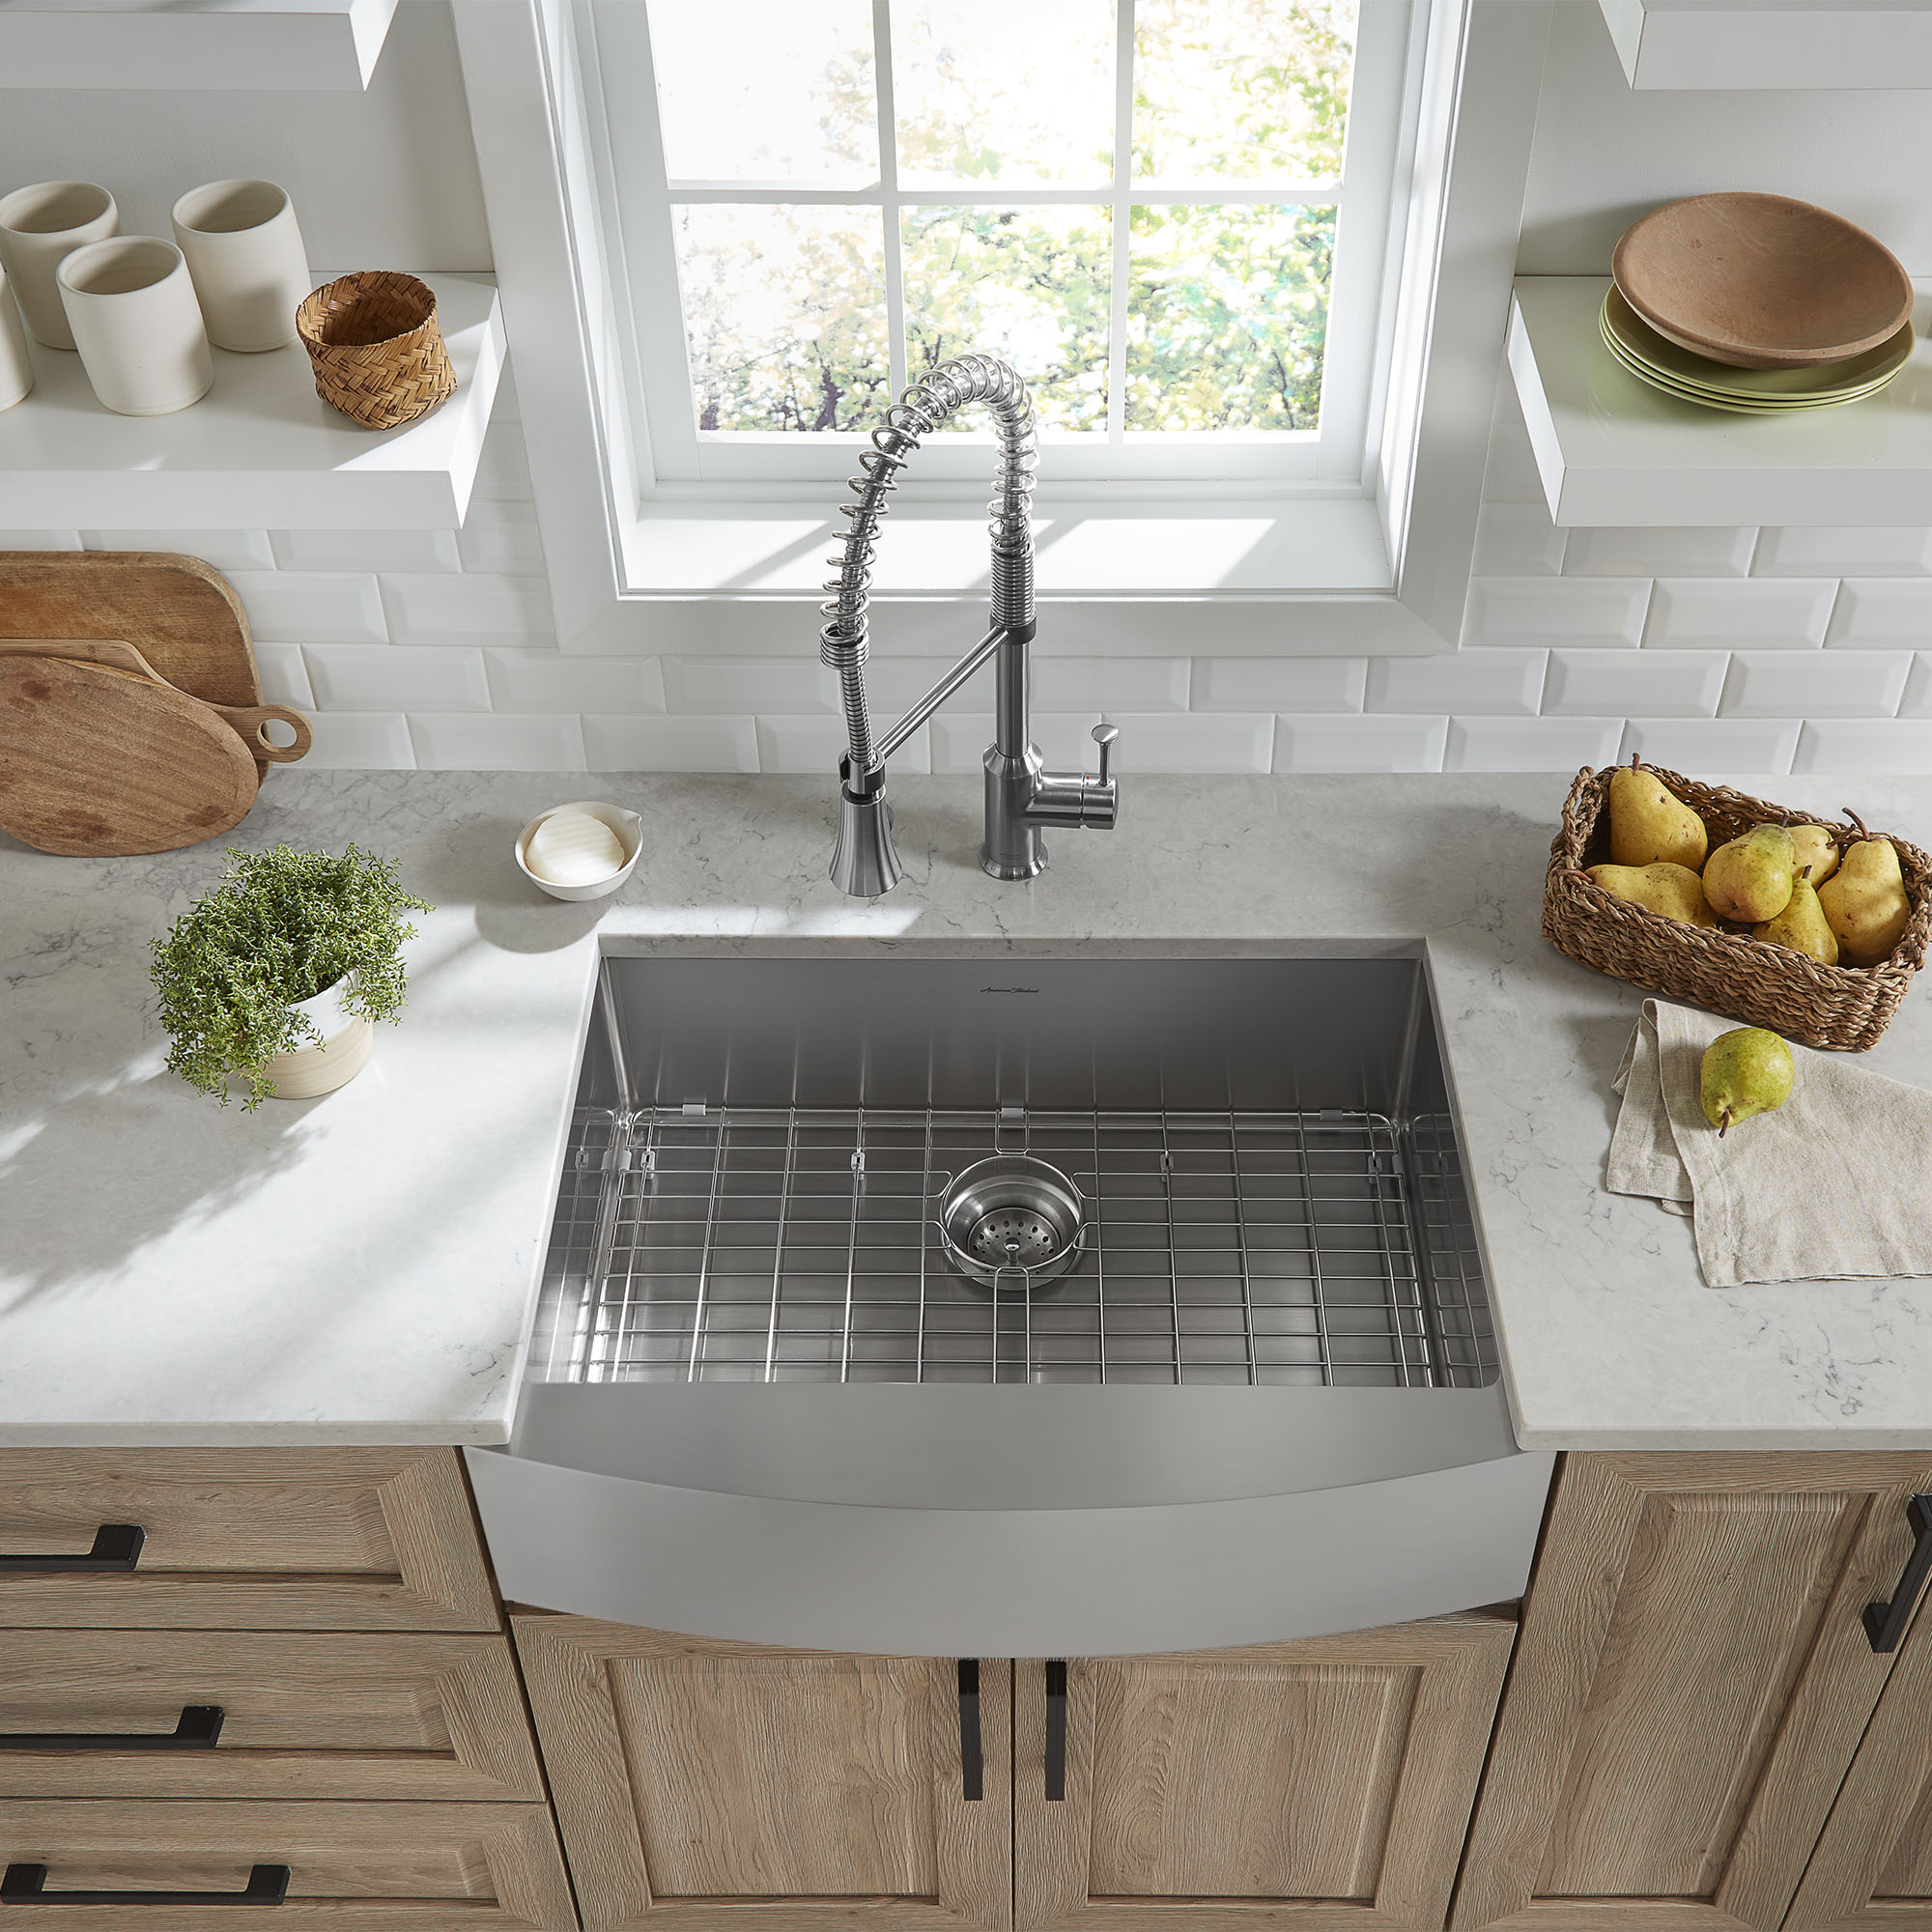 Popular Stainless Steel Kitchen Sinks